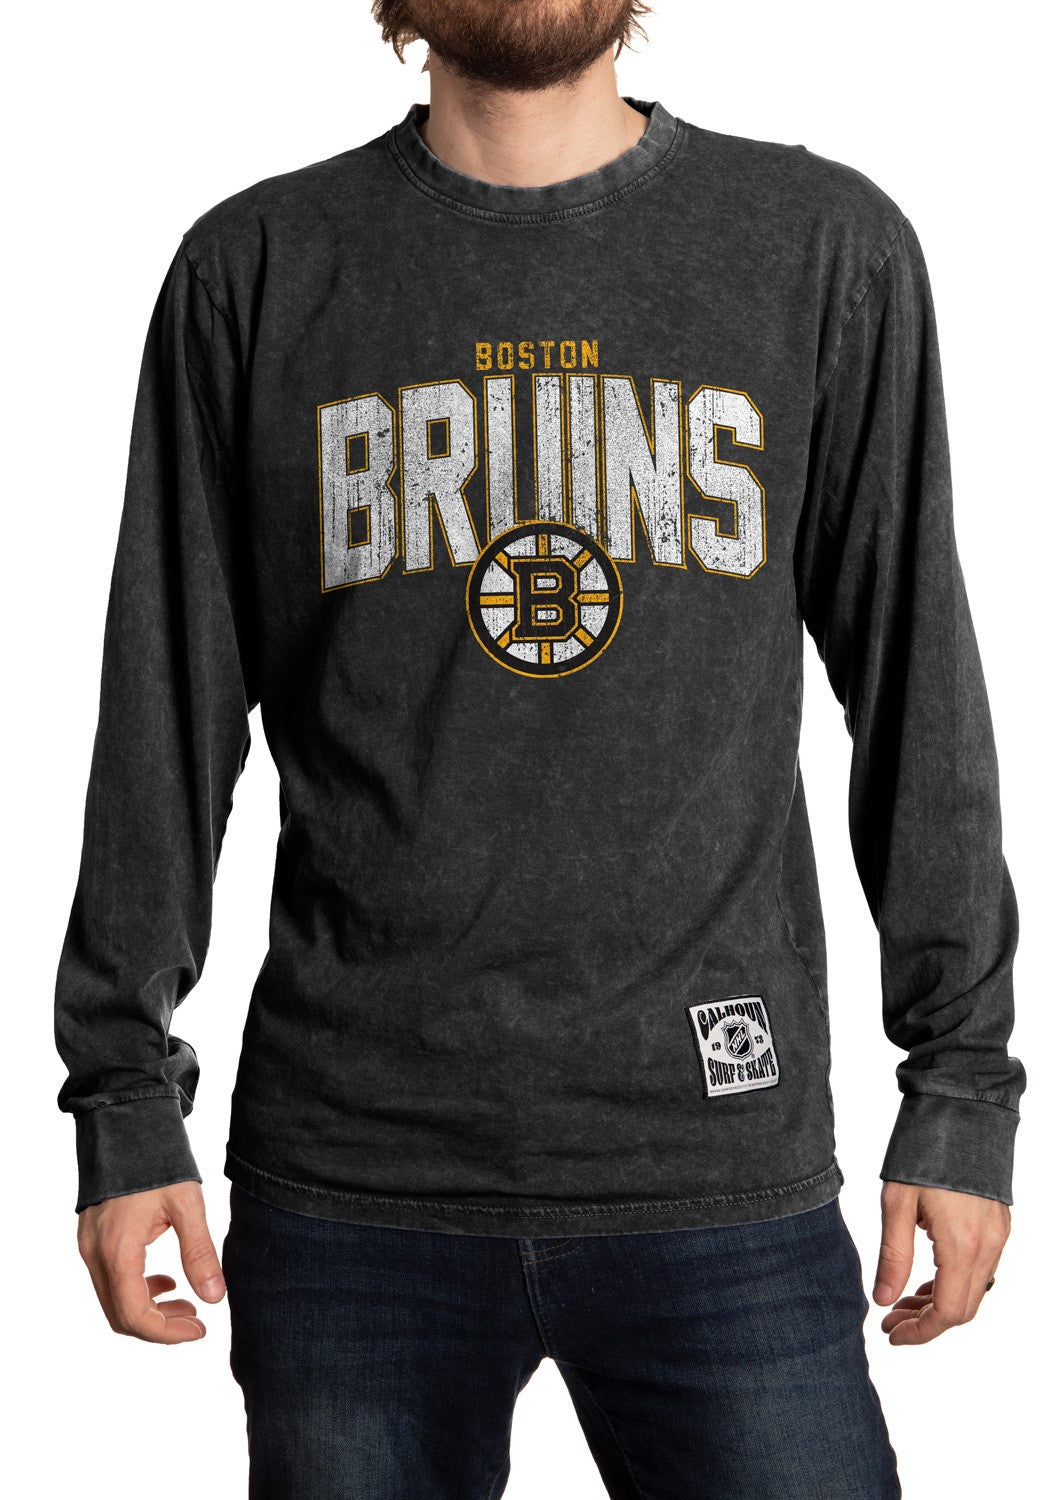 Boston Bruins Acid Wash Long Sleeve Shirt Front View